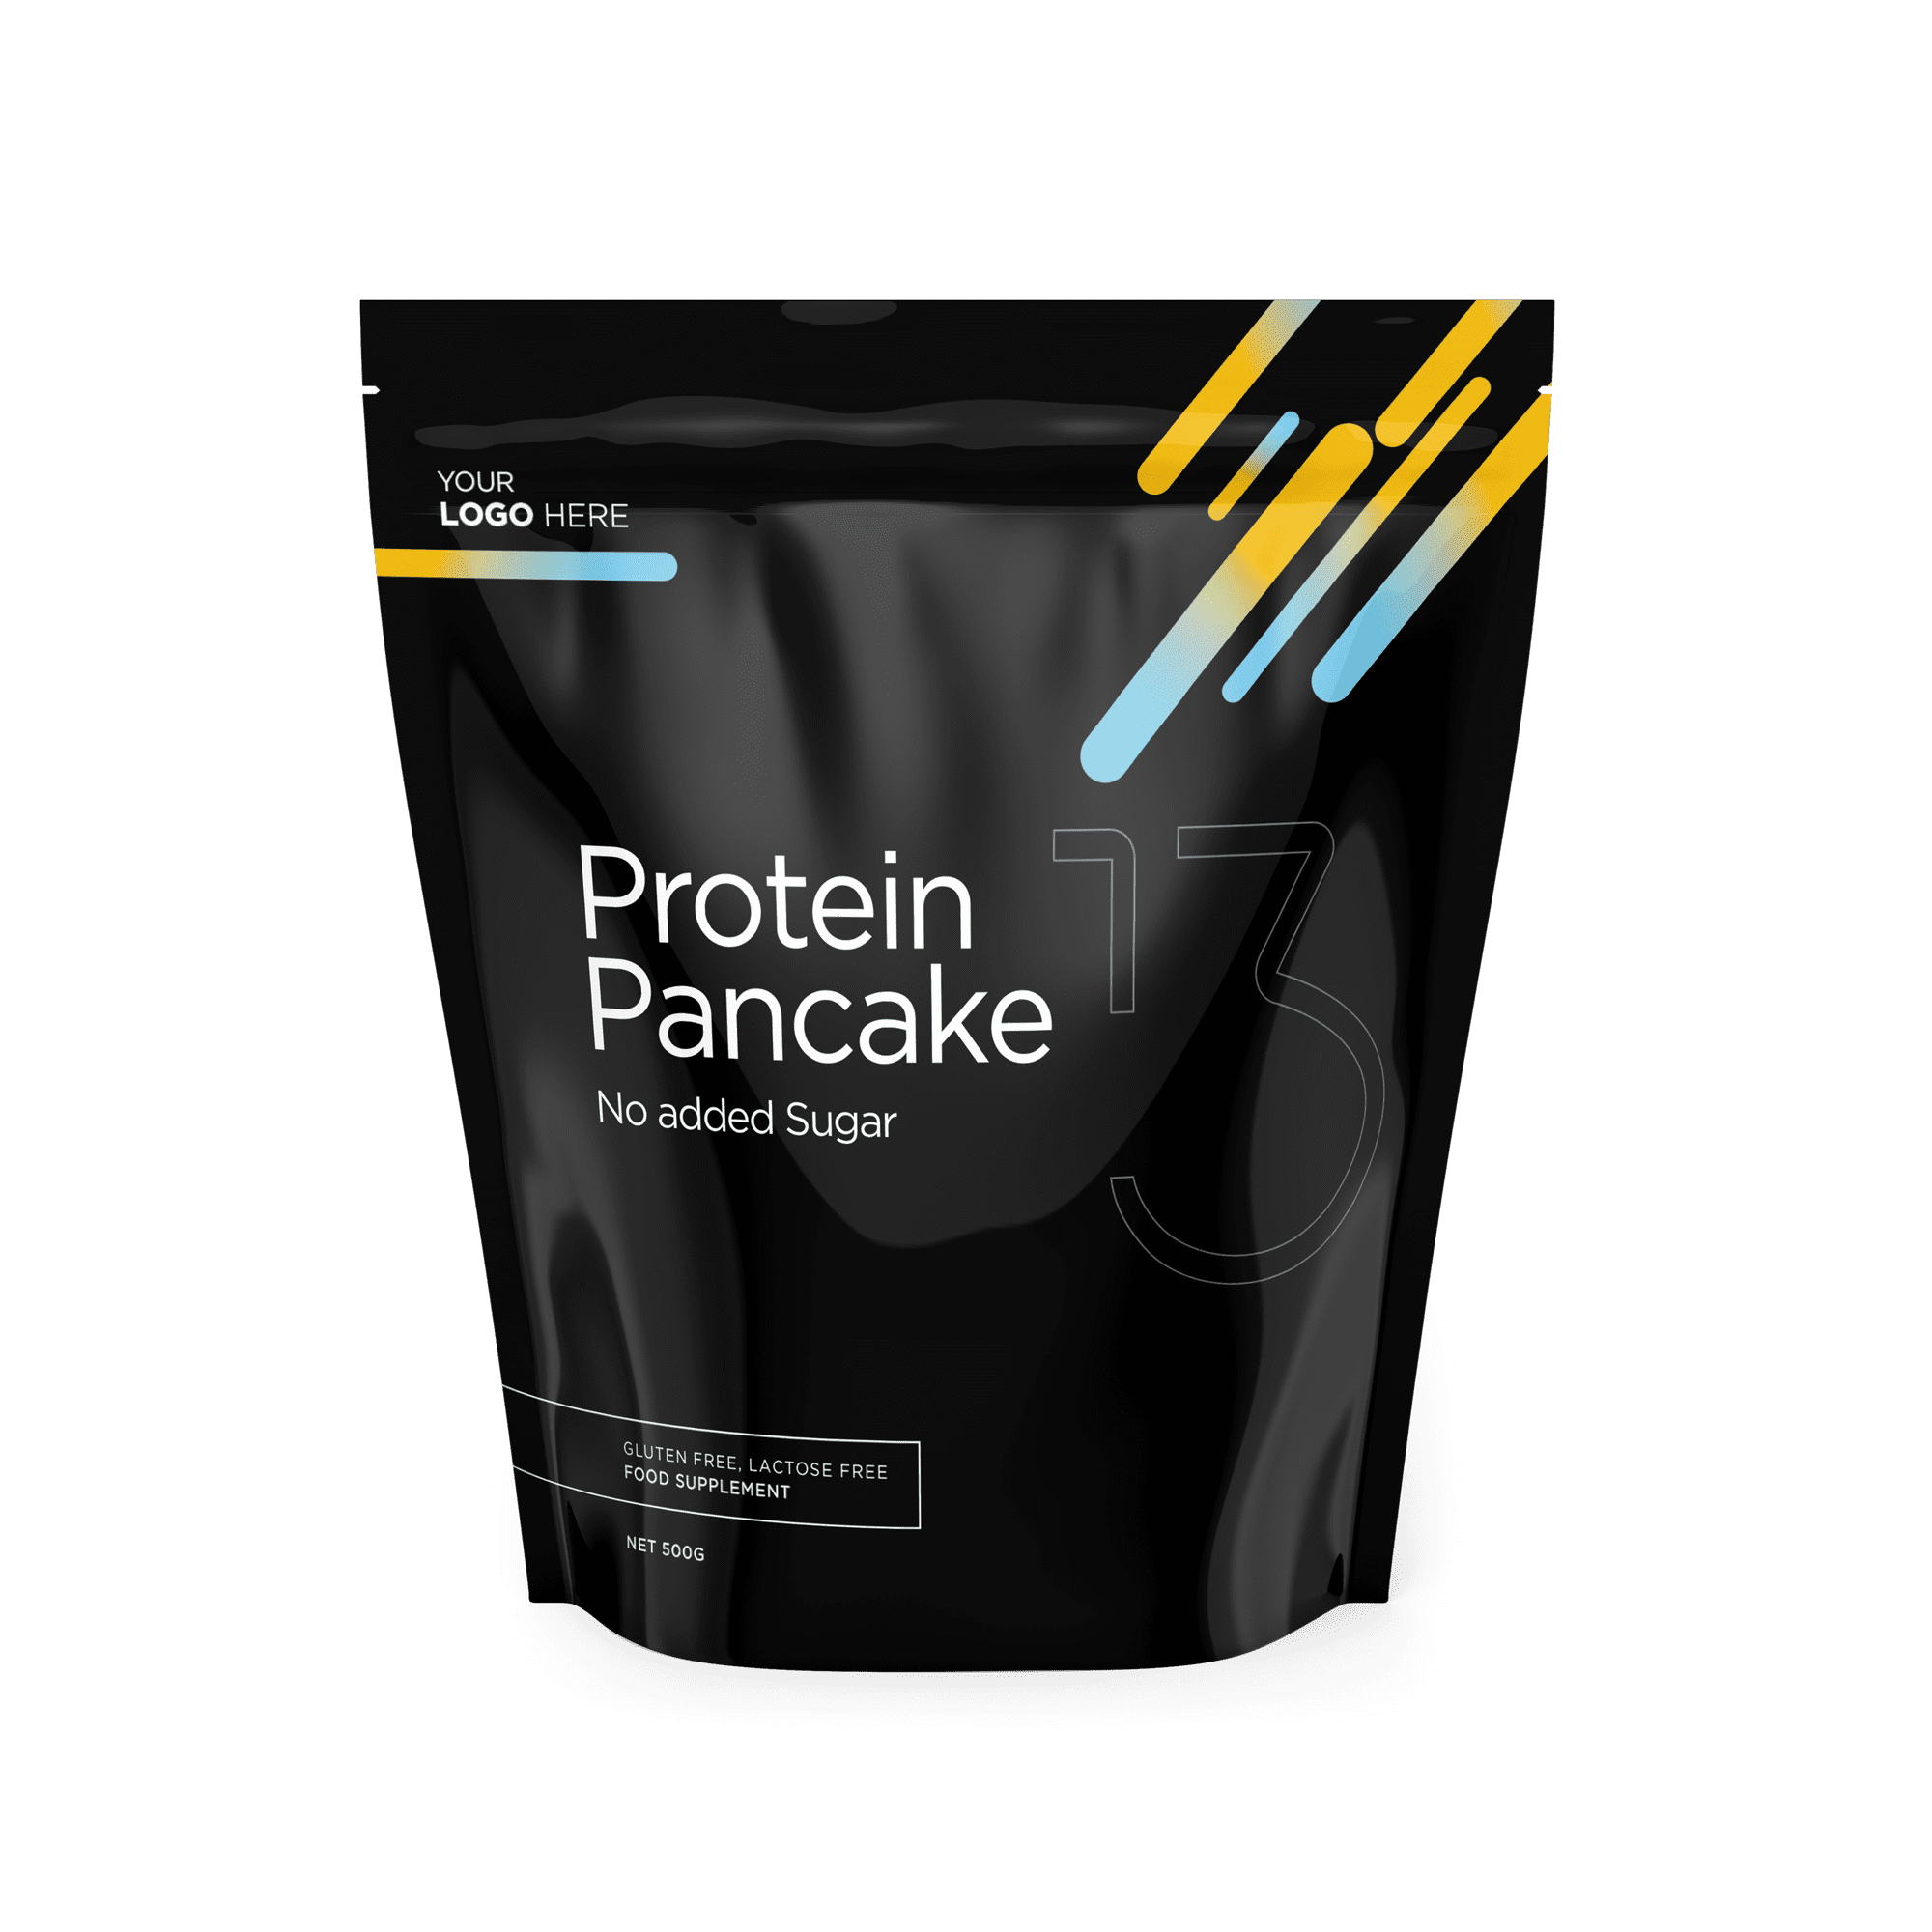 13pi_ProteinPancake_bag_mockup